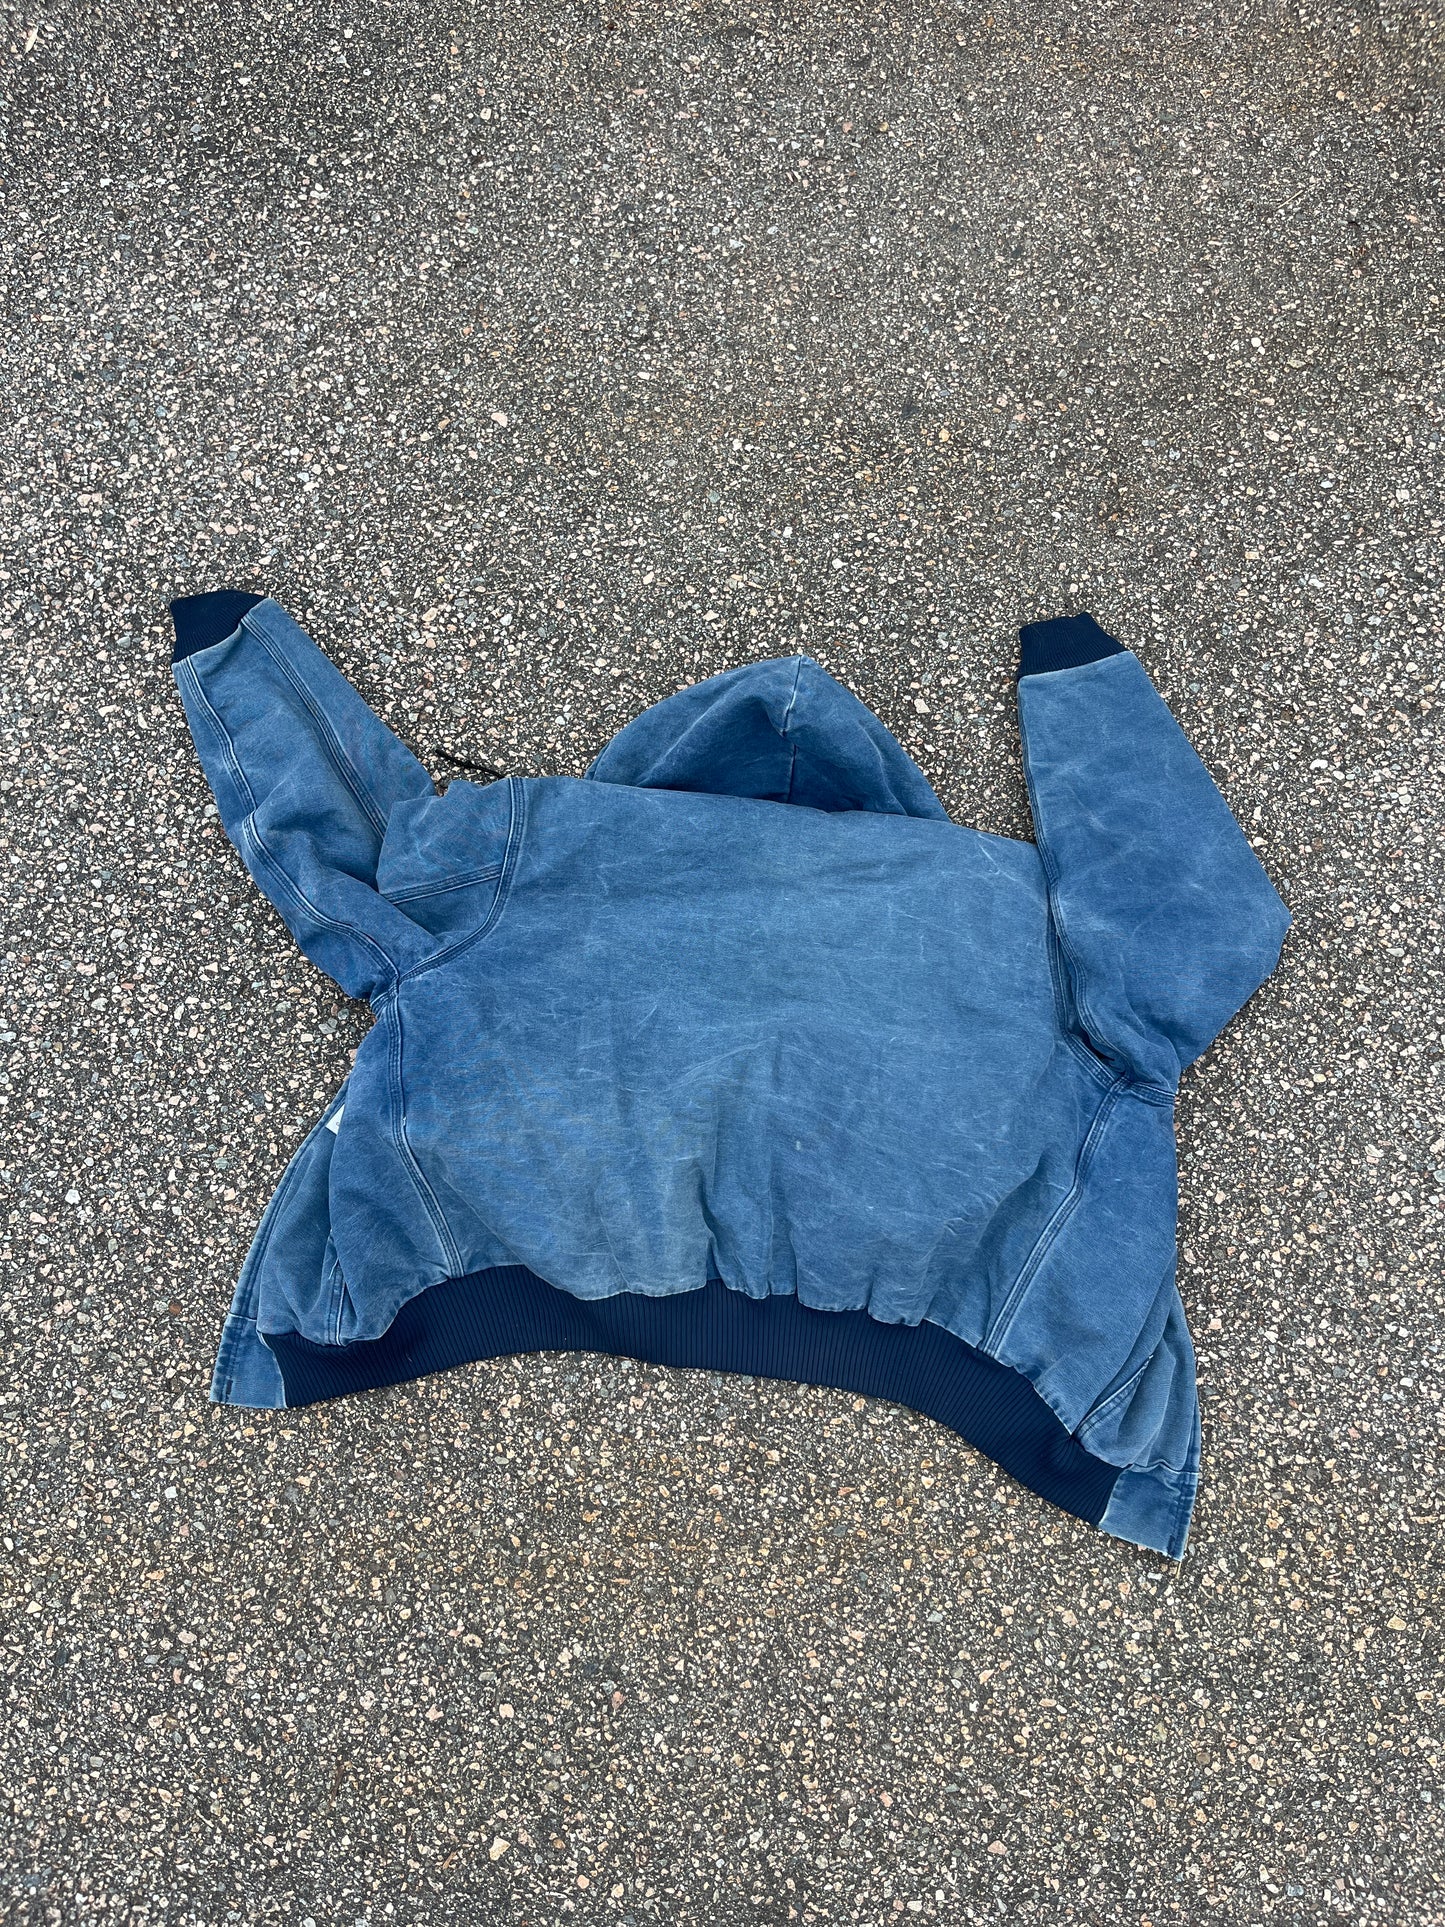 Faded Sky Blue Carhartt Active Jacket - Fits M-L